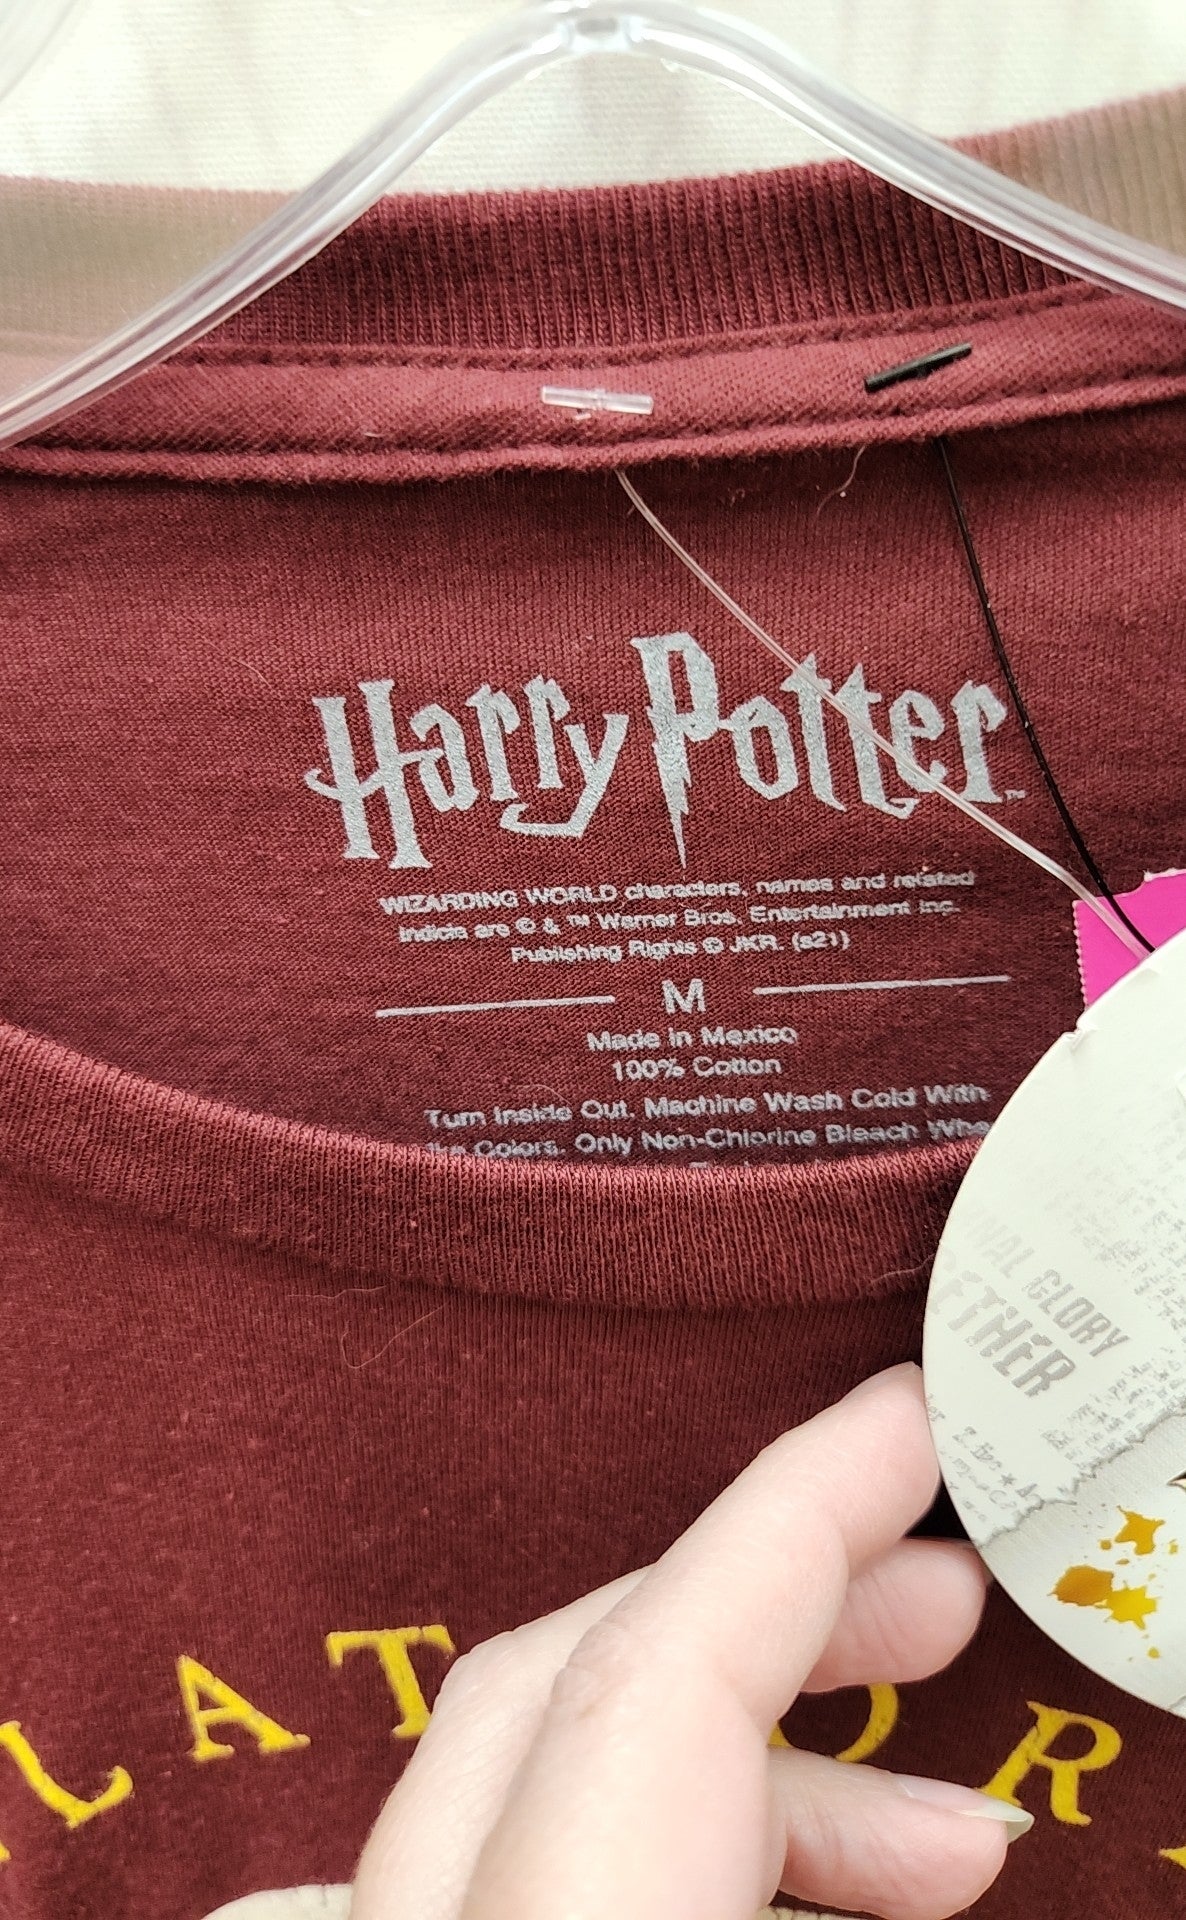 Harry Potter Men's Size M Maroon Shirt